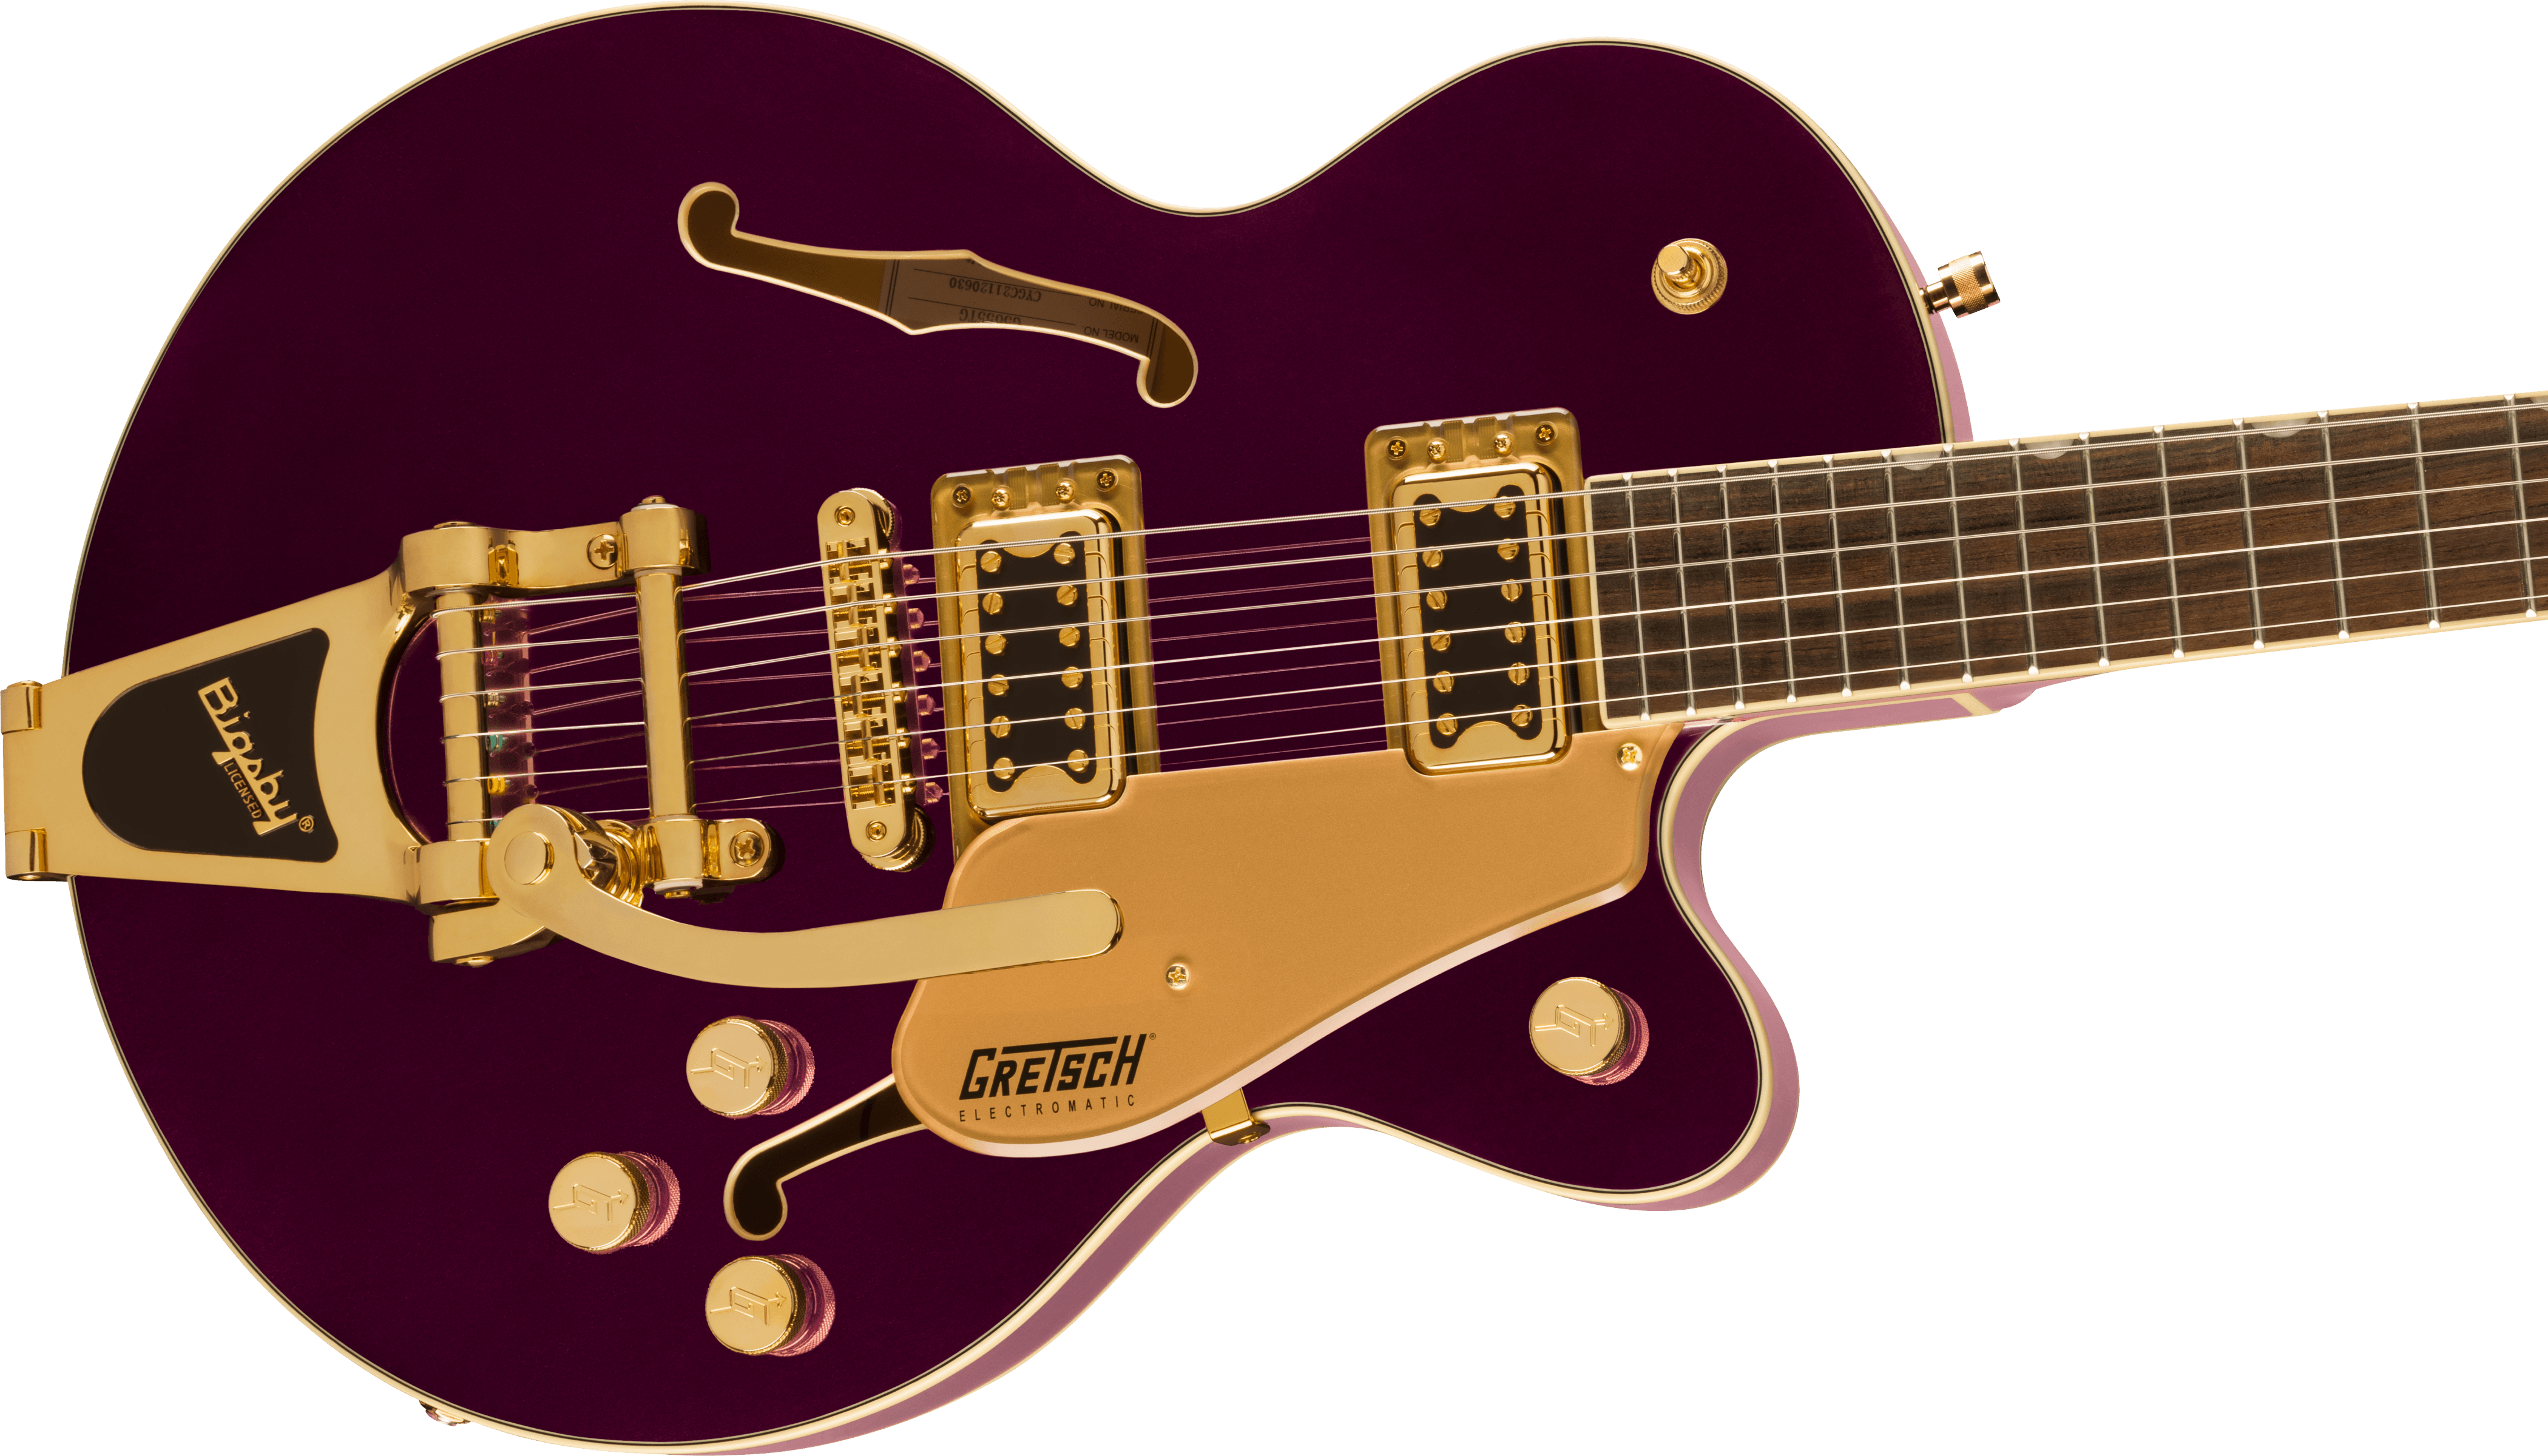 Gretsch G5655tg Electromatic Center Block Jr. Hh Bigsby Lau - Amethyst - Semi-hollow electric guitar - Variation 3